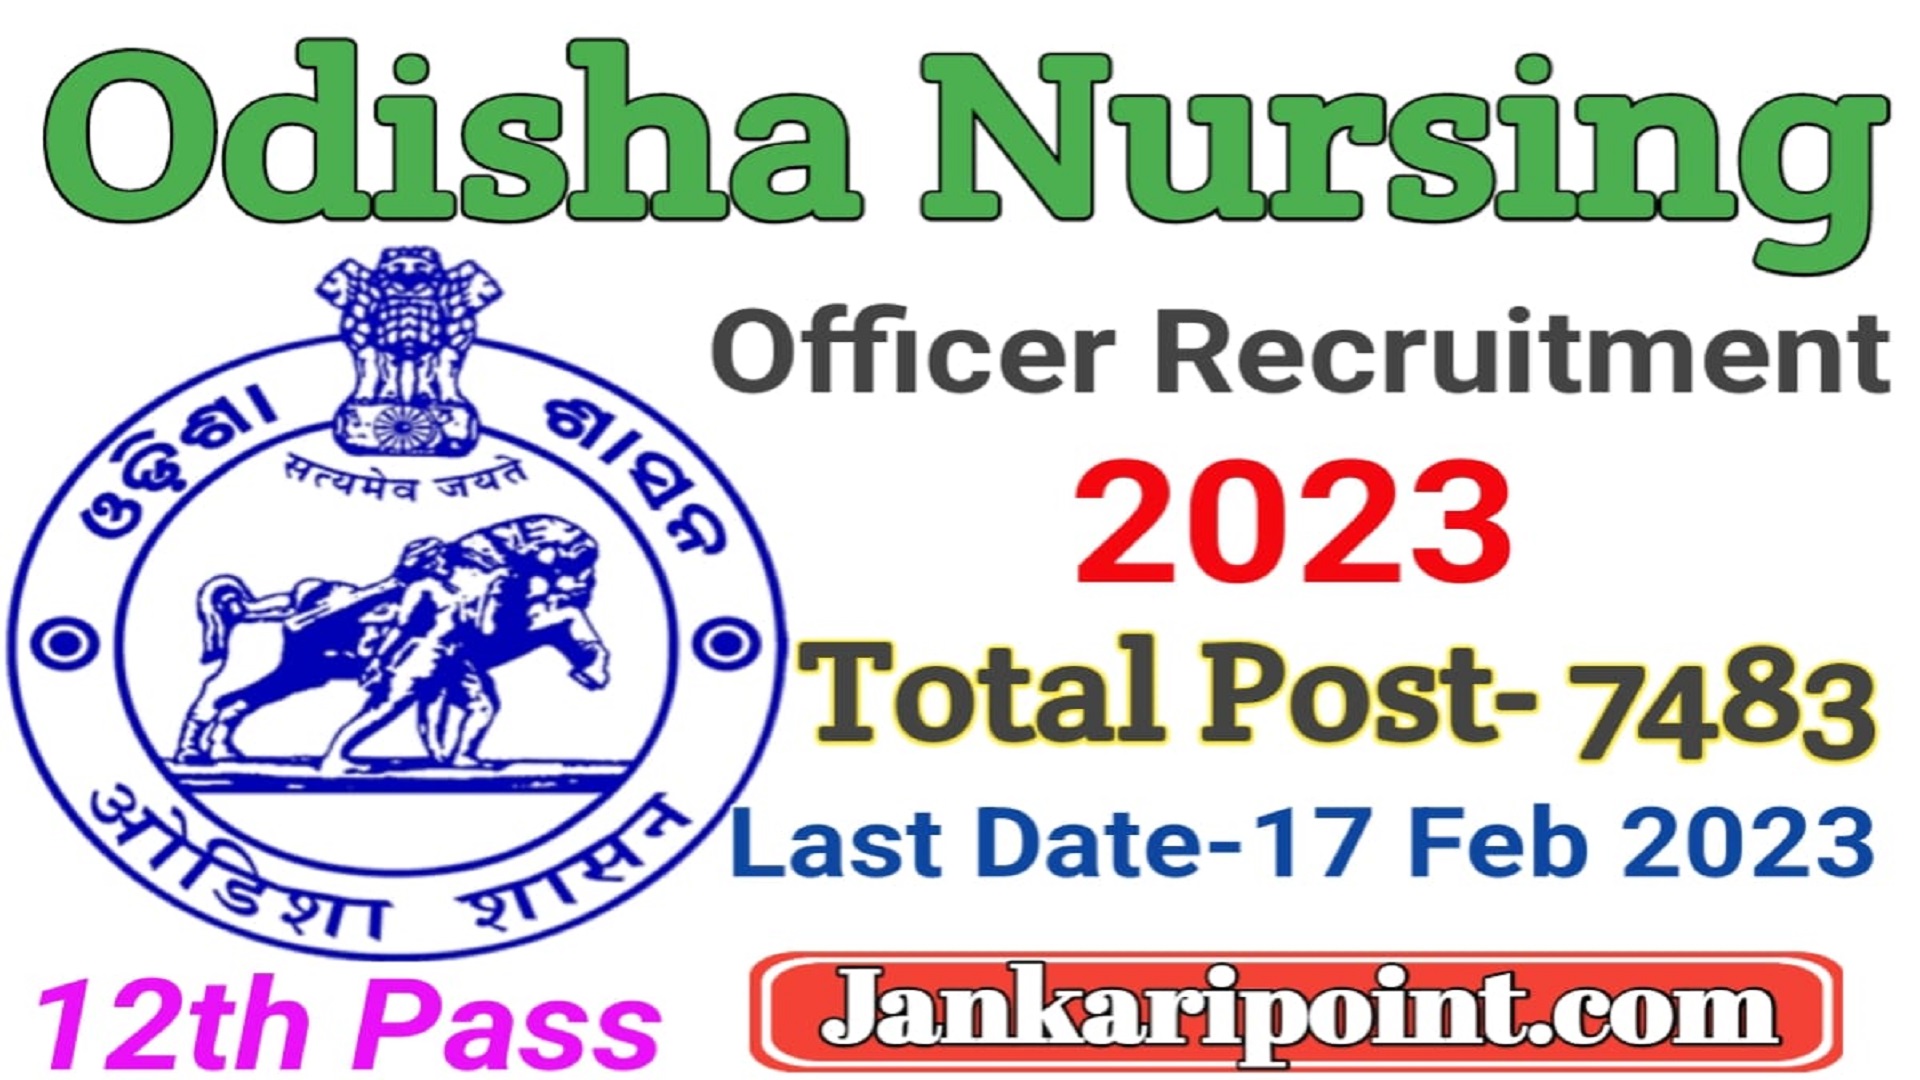 Odisha Nursing Officer Recruitment 2023